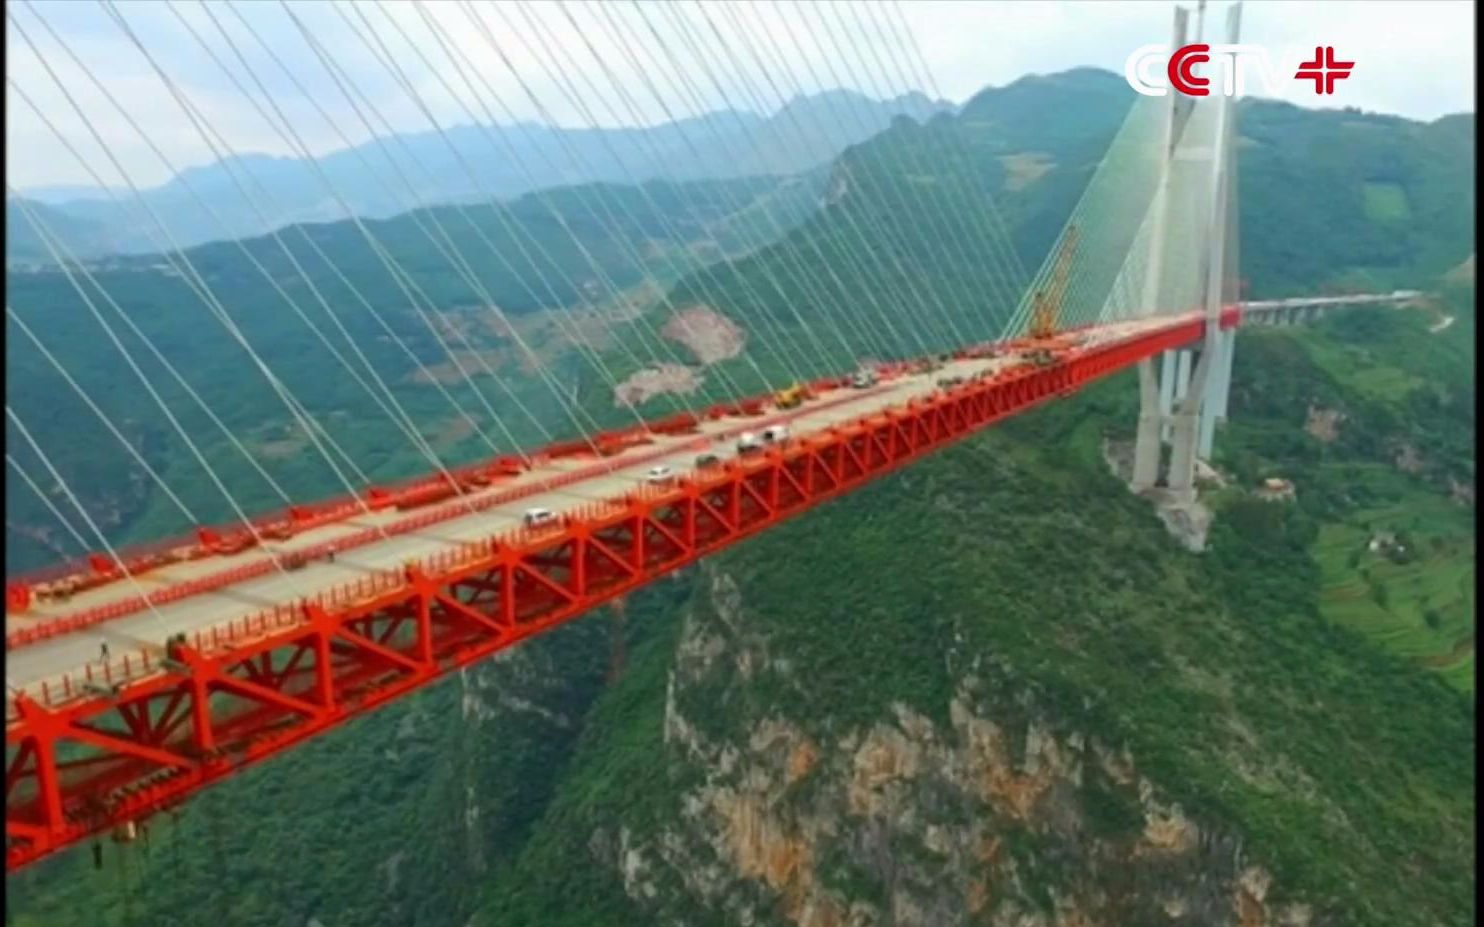 Millau Viaduct: Construction Features of the World's Tallest Bridge